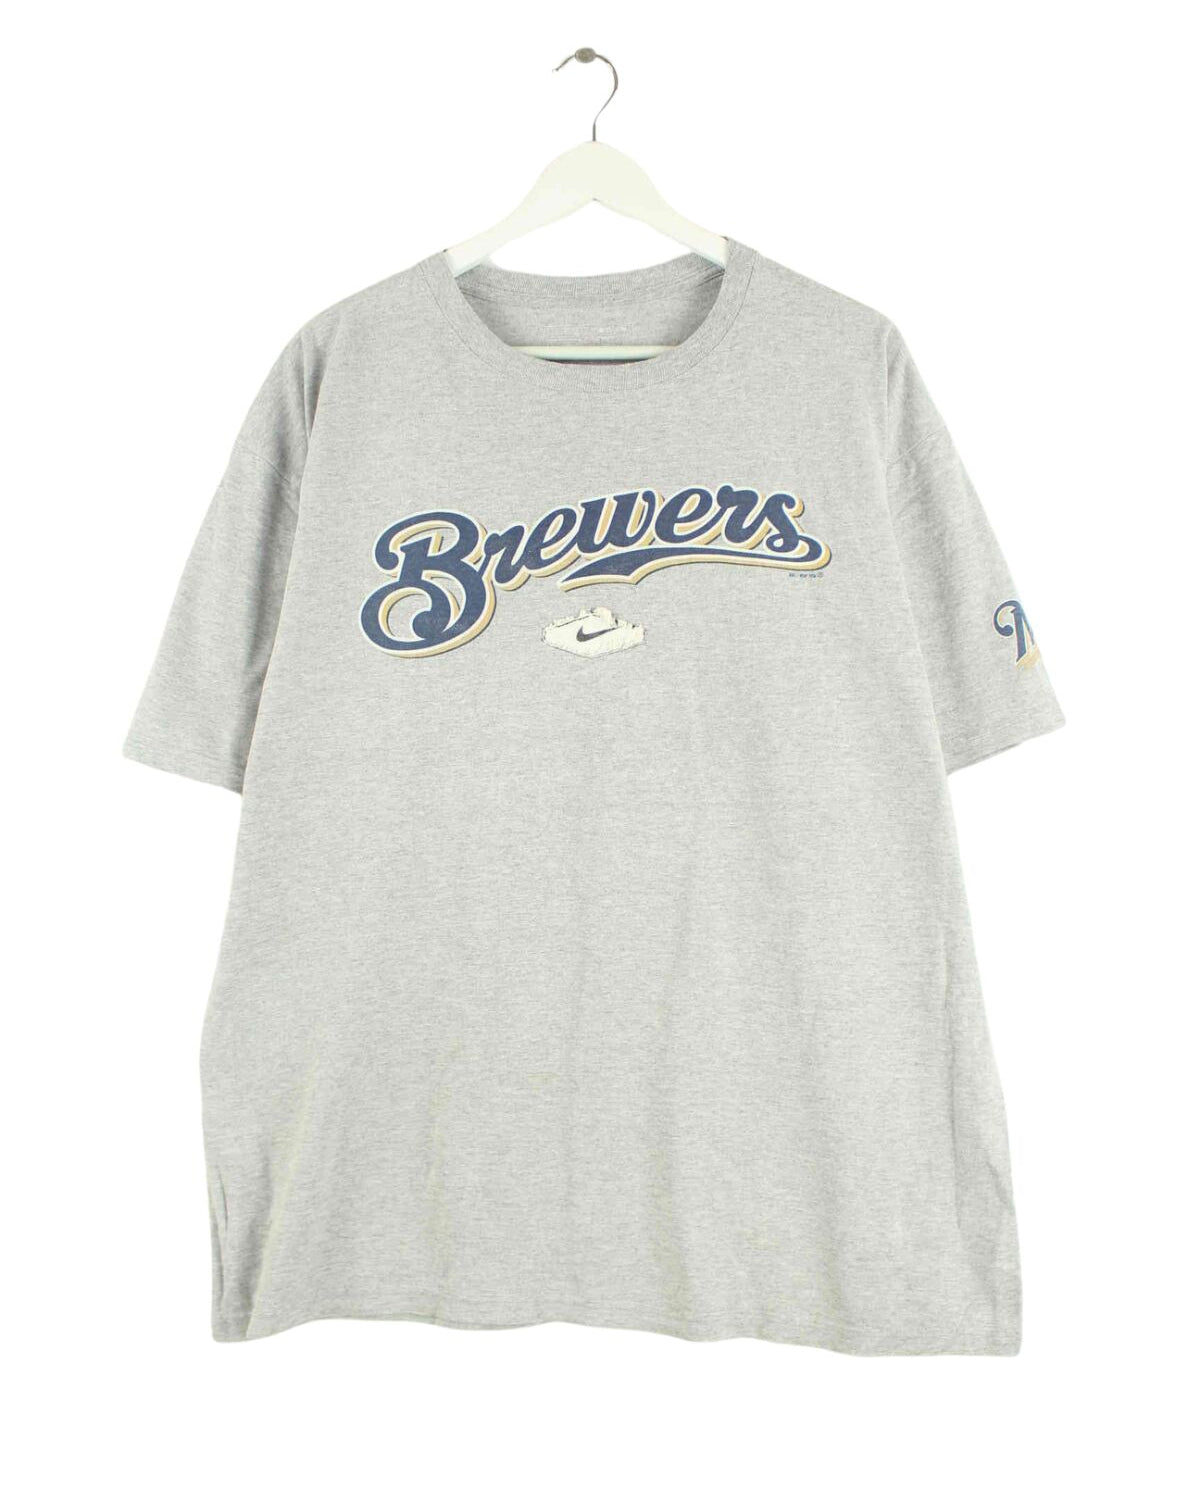 Nike 2006 Brewers Print T-Shirt Grau XL (front image)